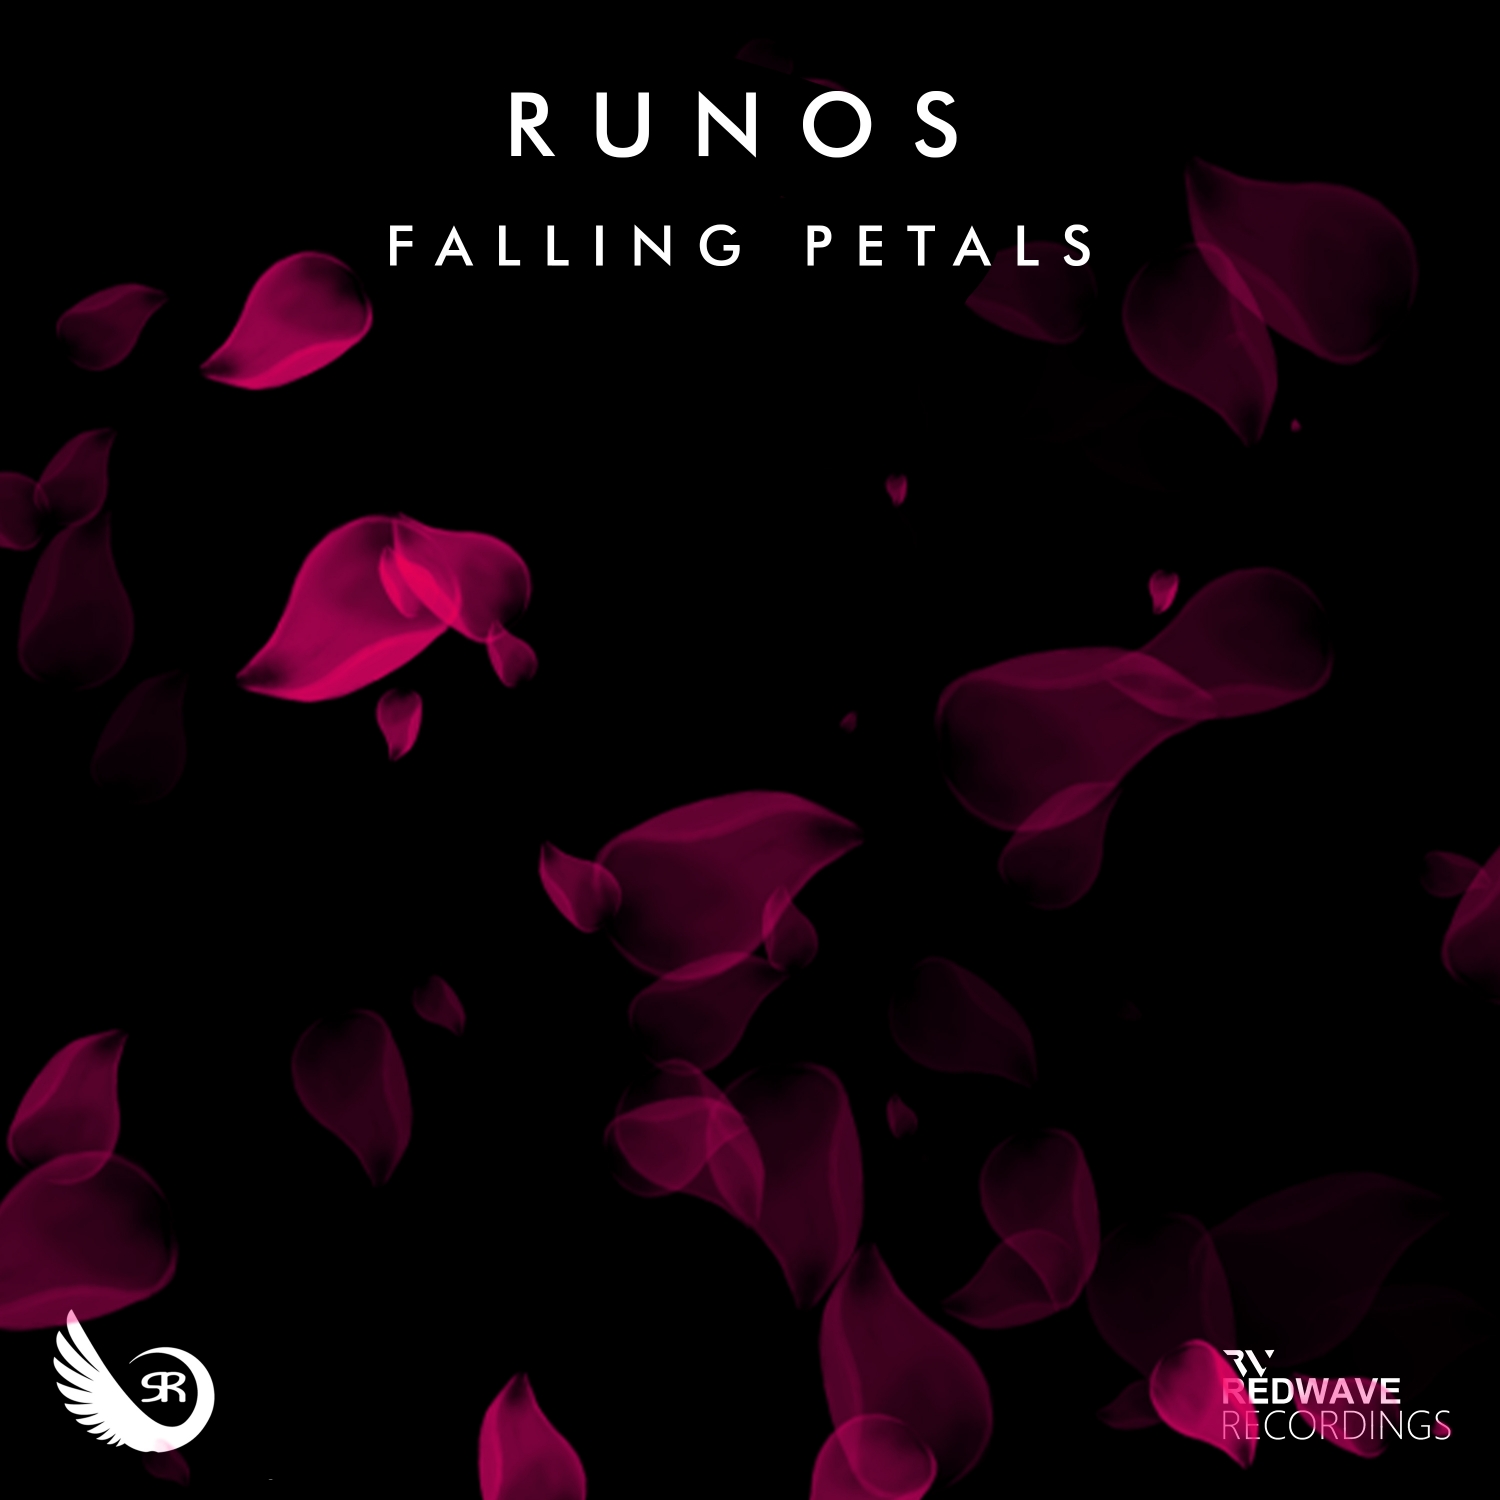 RUNOS presents Falling Petals on Sahara Recordings